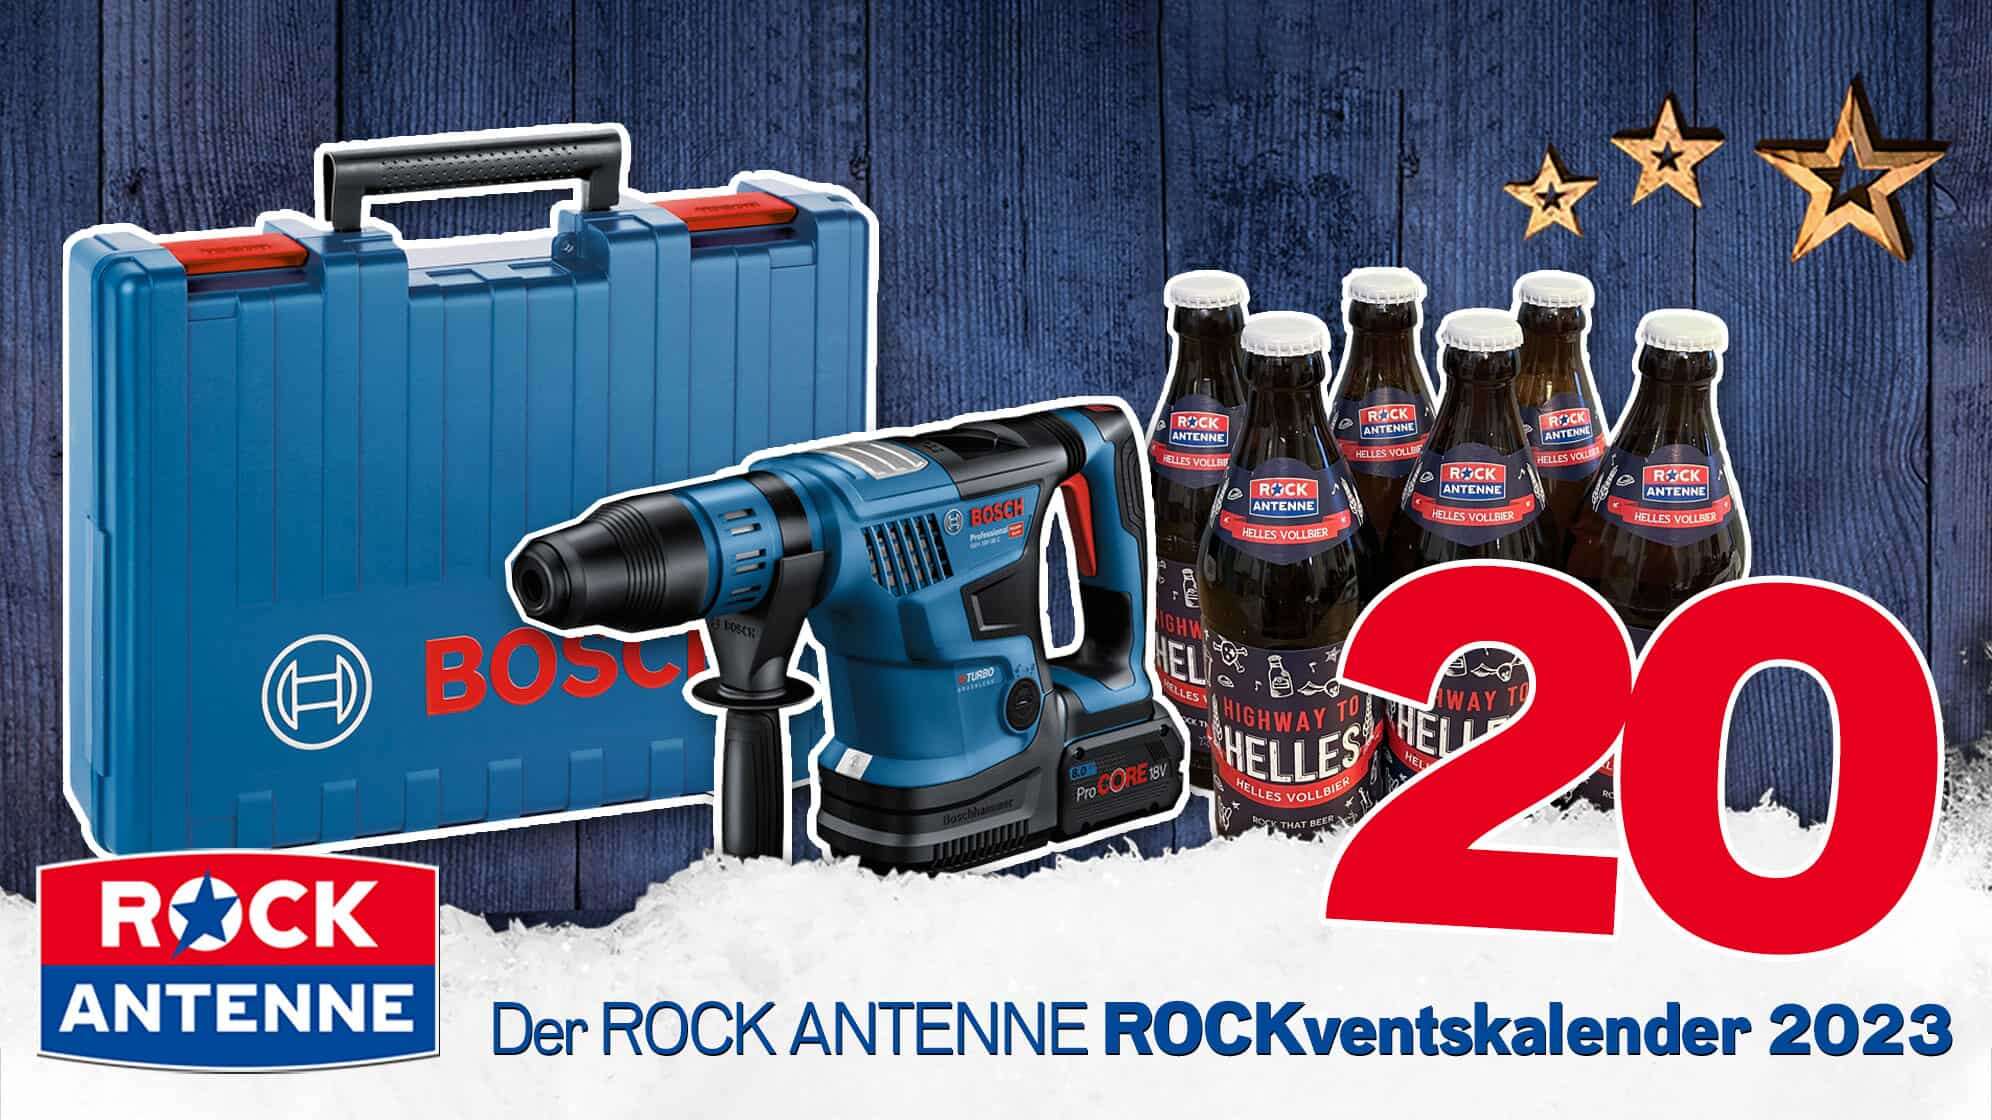 ROCK ANTENNE ROCKventskalender Türchen 20: BOSCH Professional Akku-Bohrhammer + ROCK ANTENNE bier